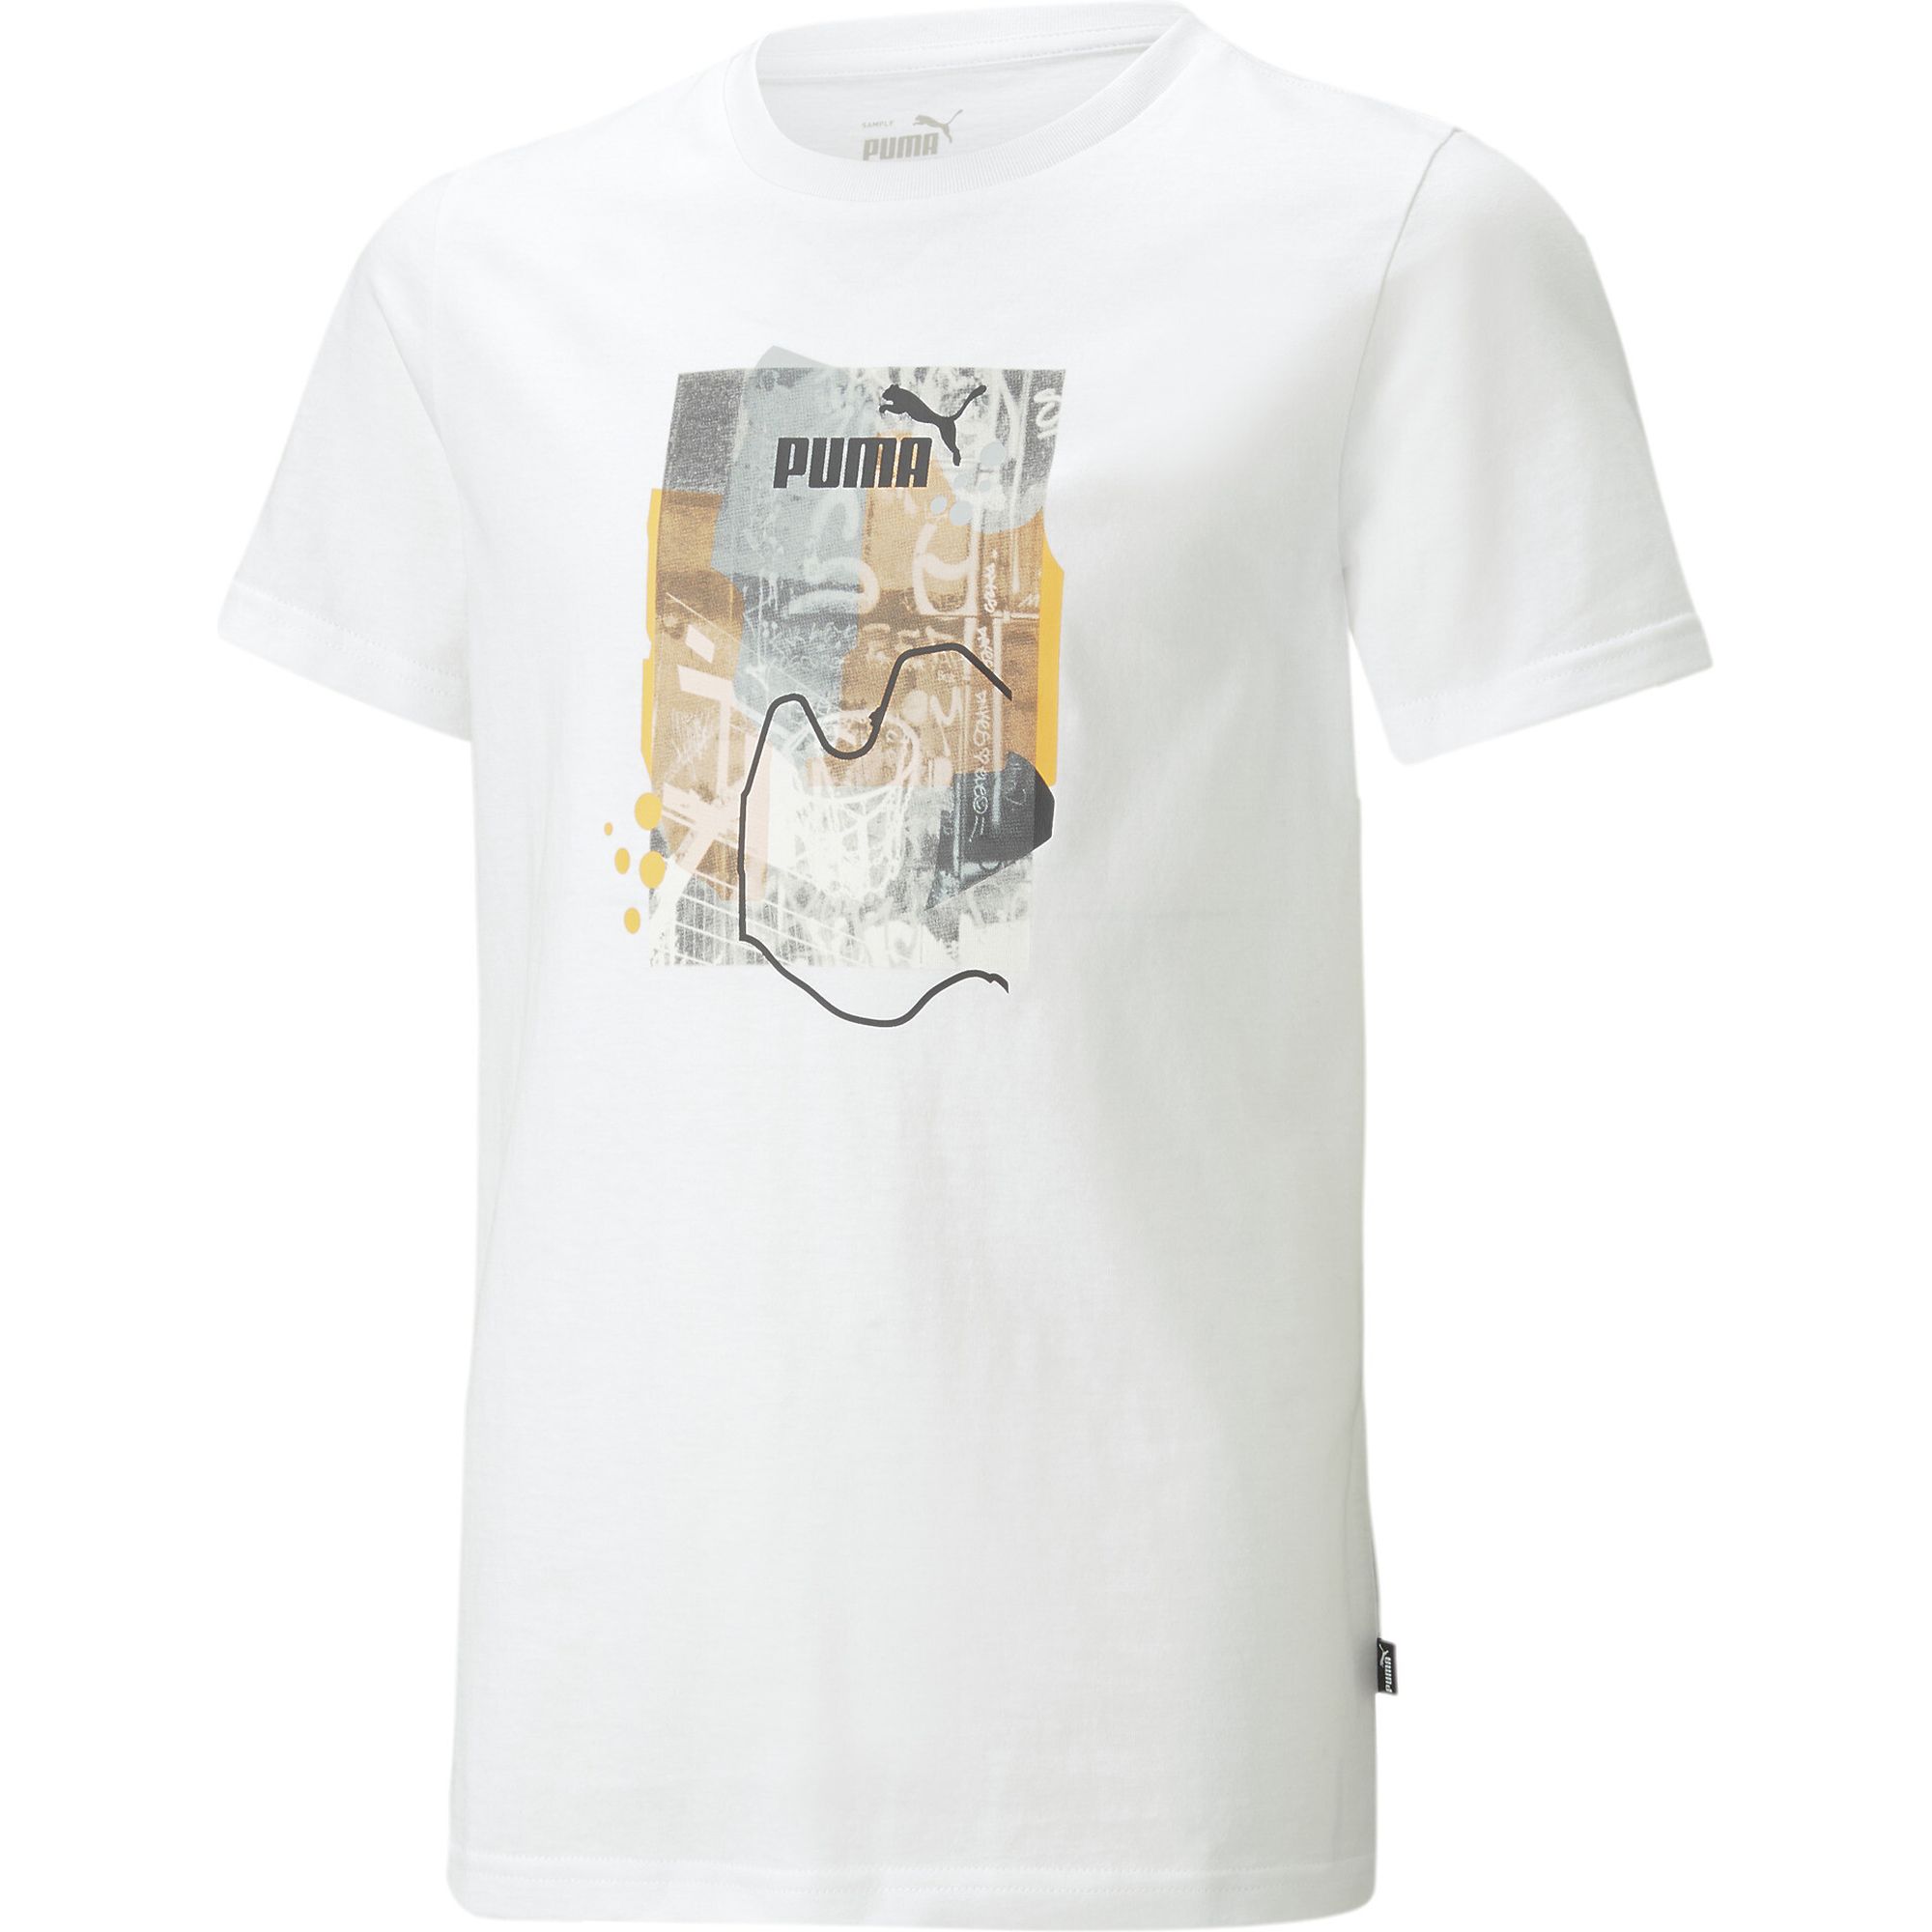 Puma Ess+ Street Art Graphic Tee B Shirts white jetzt bei Berger kaufen | Sport-T-Shirts